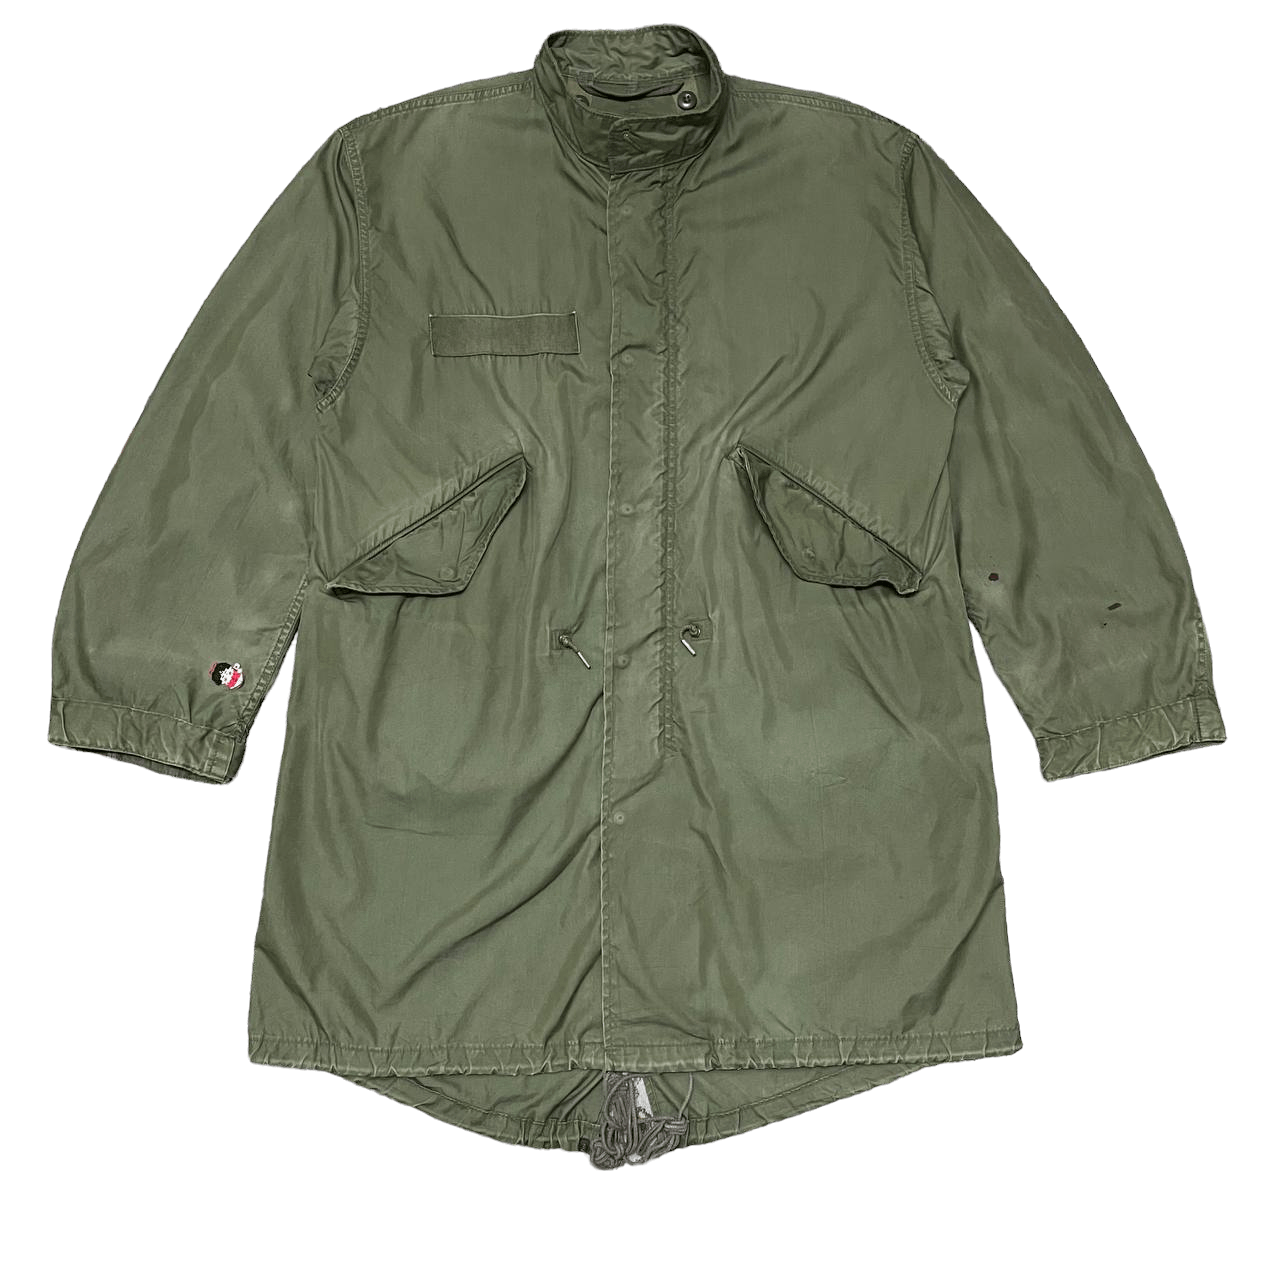 Vintage 80's Parkas Fishtail Military Jacket - 1